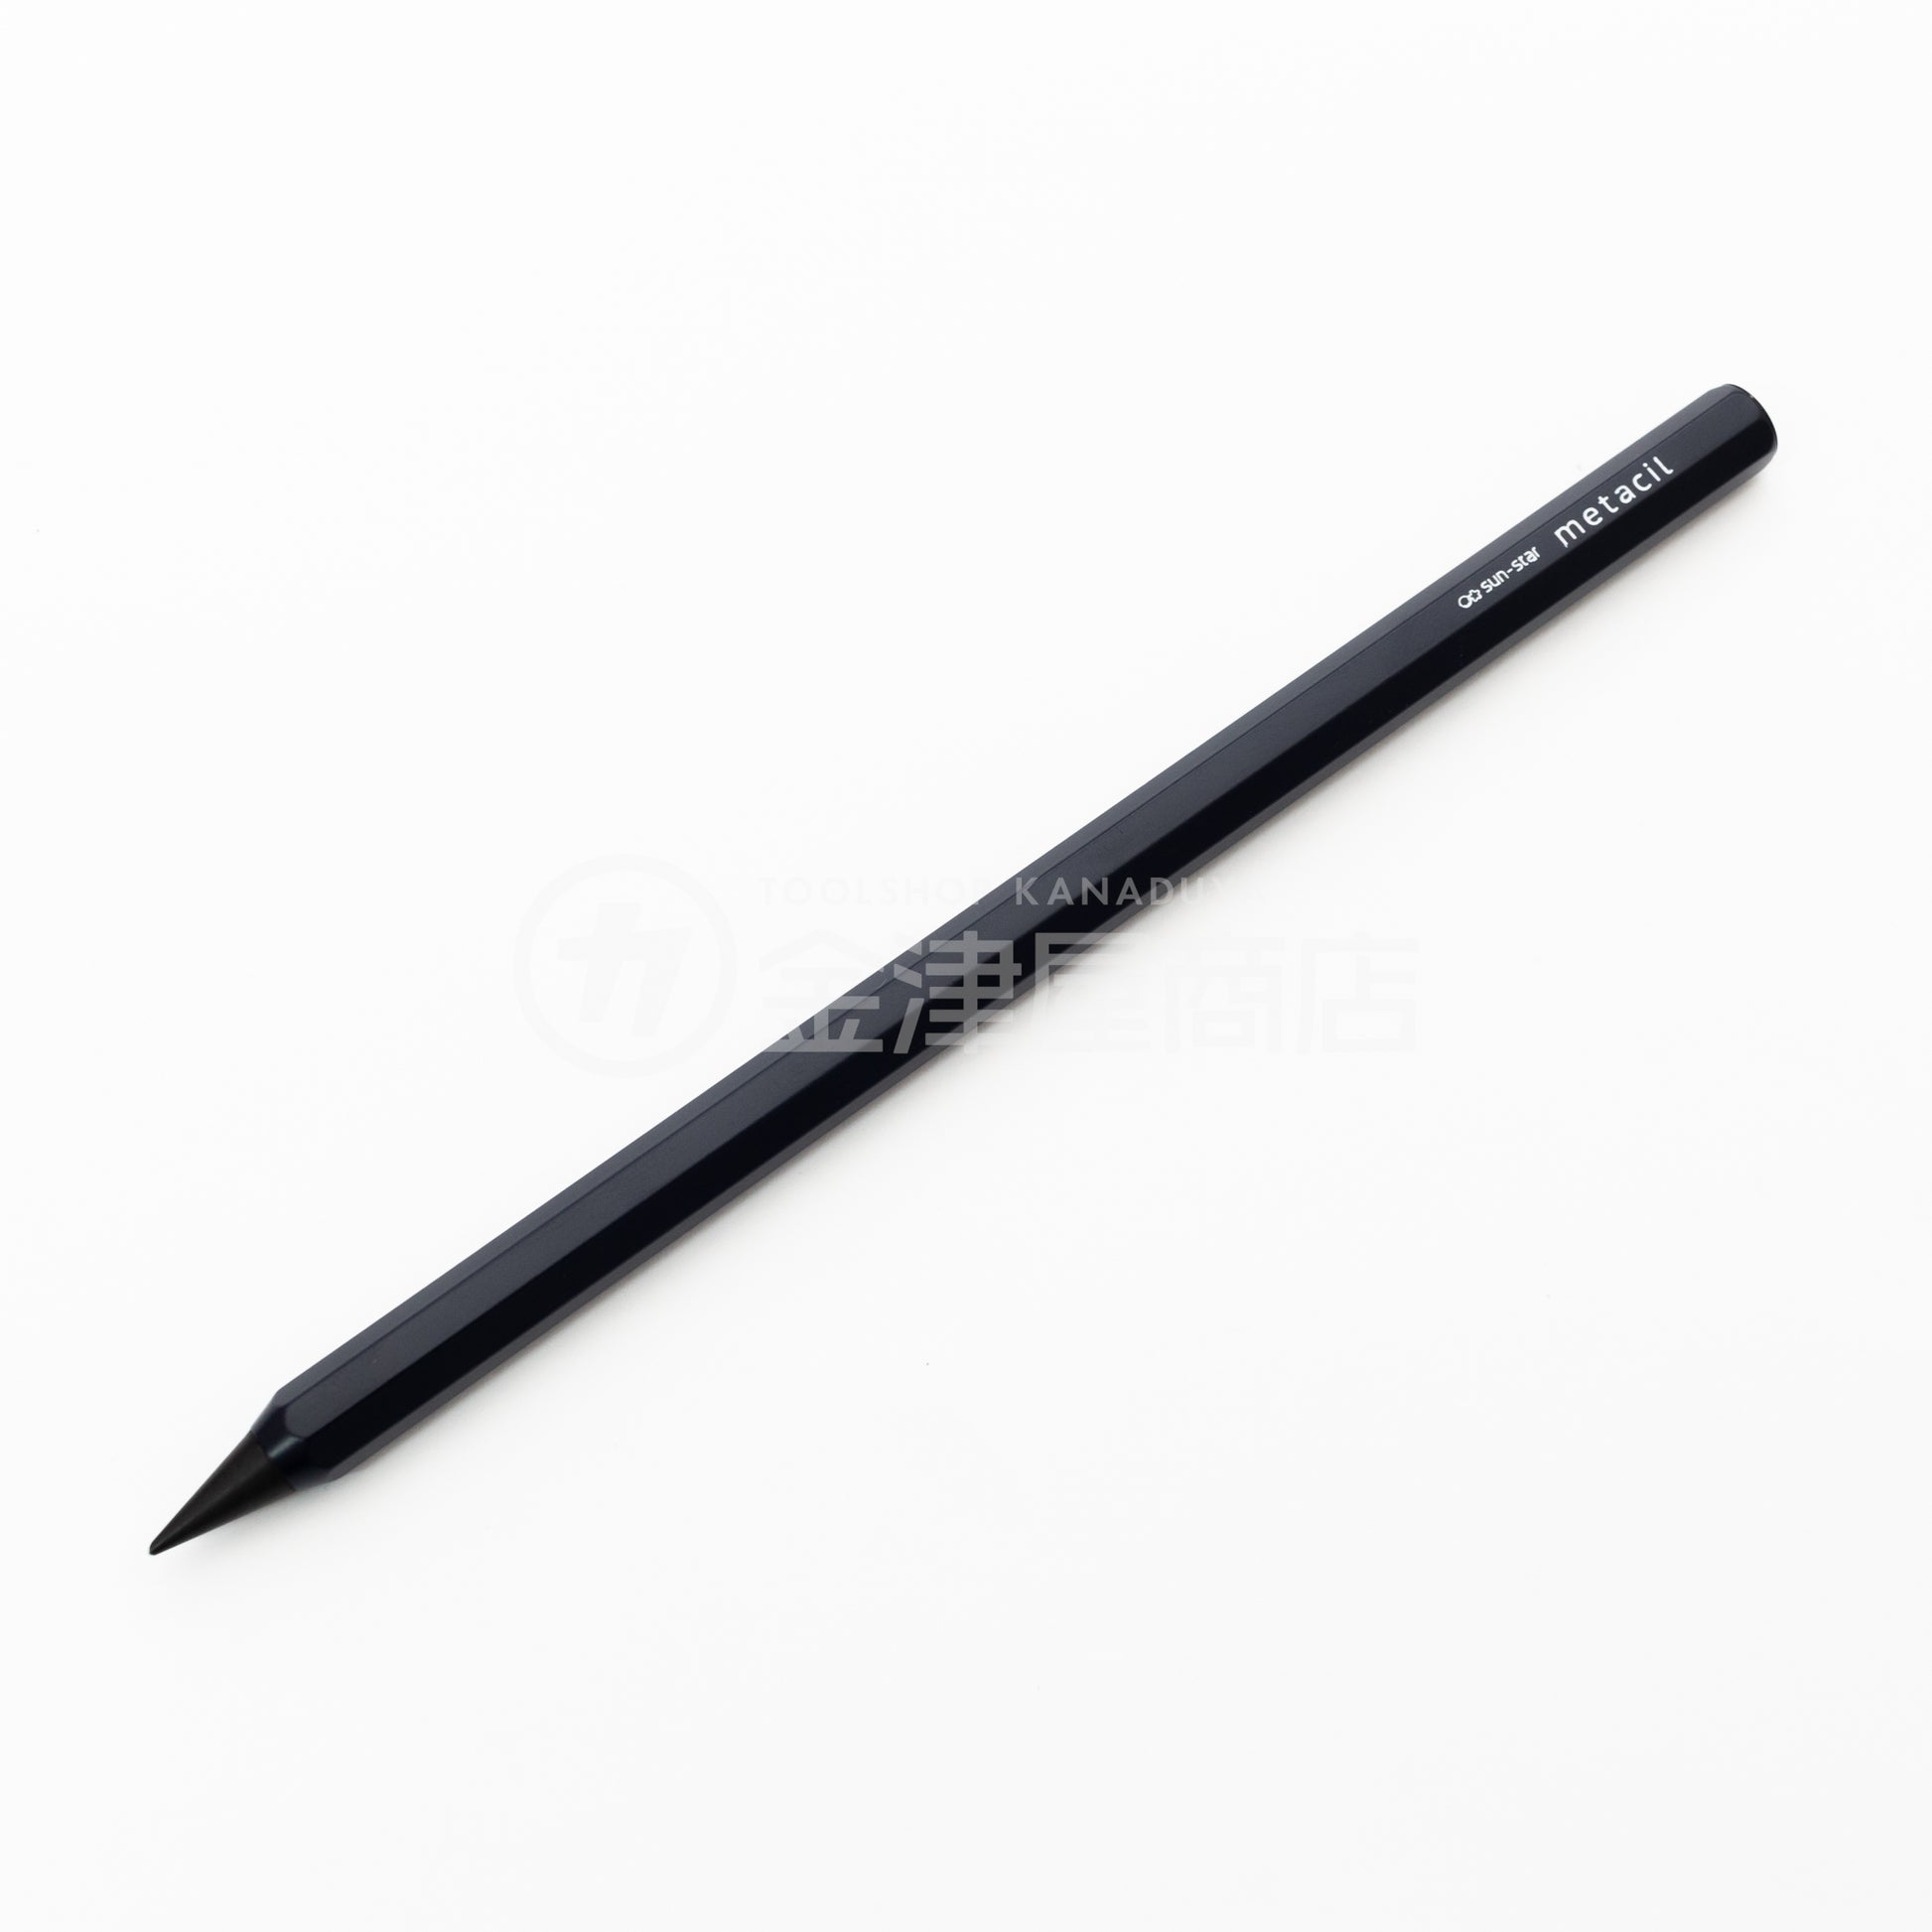 SUN-STAR Metacil Metal Pencil - Erases & Writes with Ease - Pre